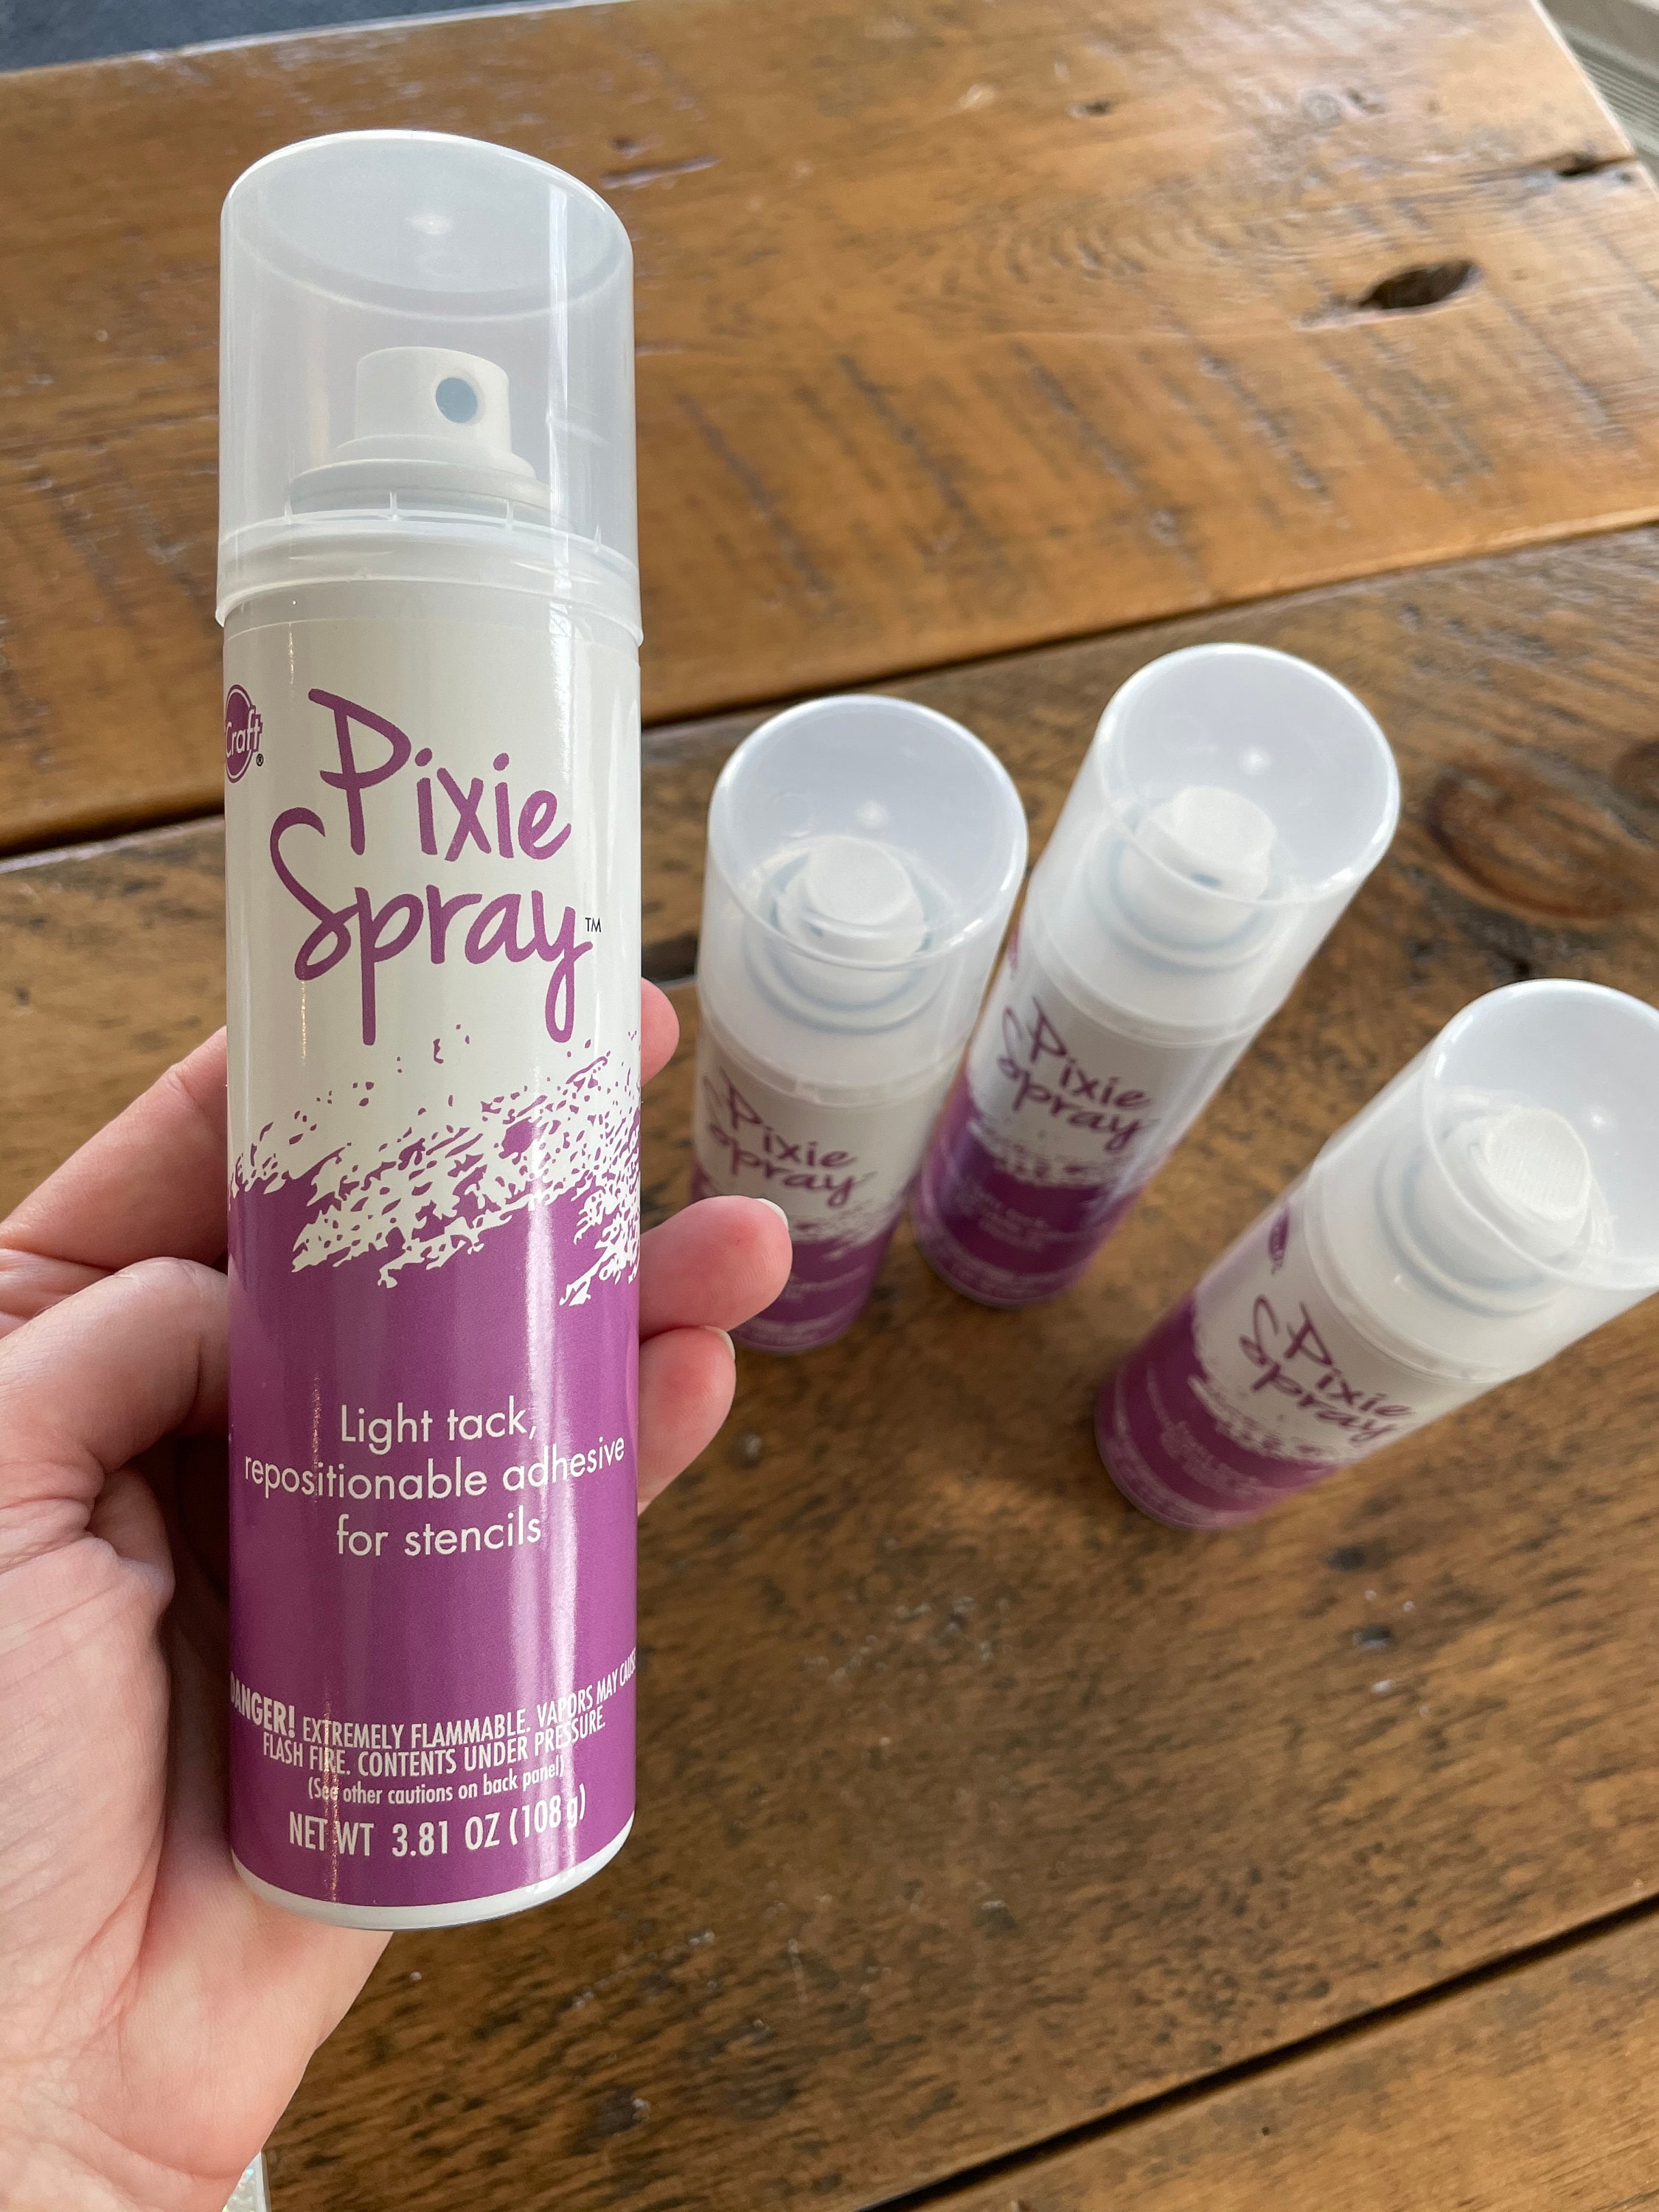 Pixie Spray Icraft Repositional Stencil Adhesive 